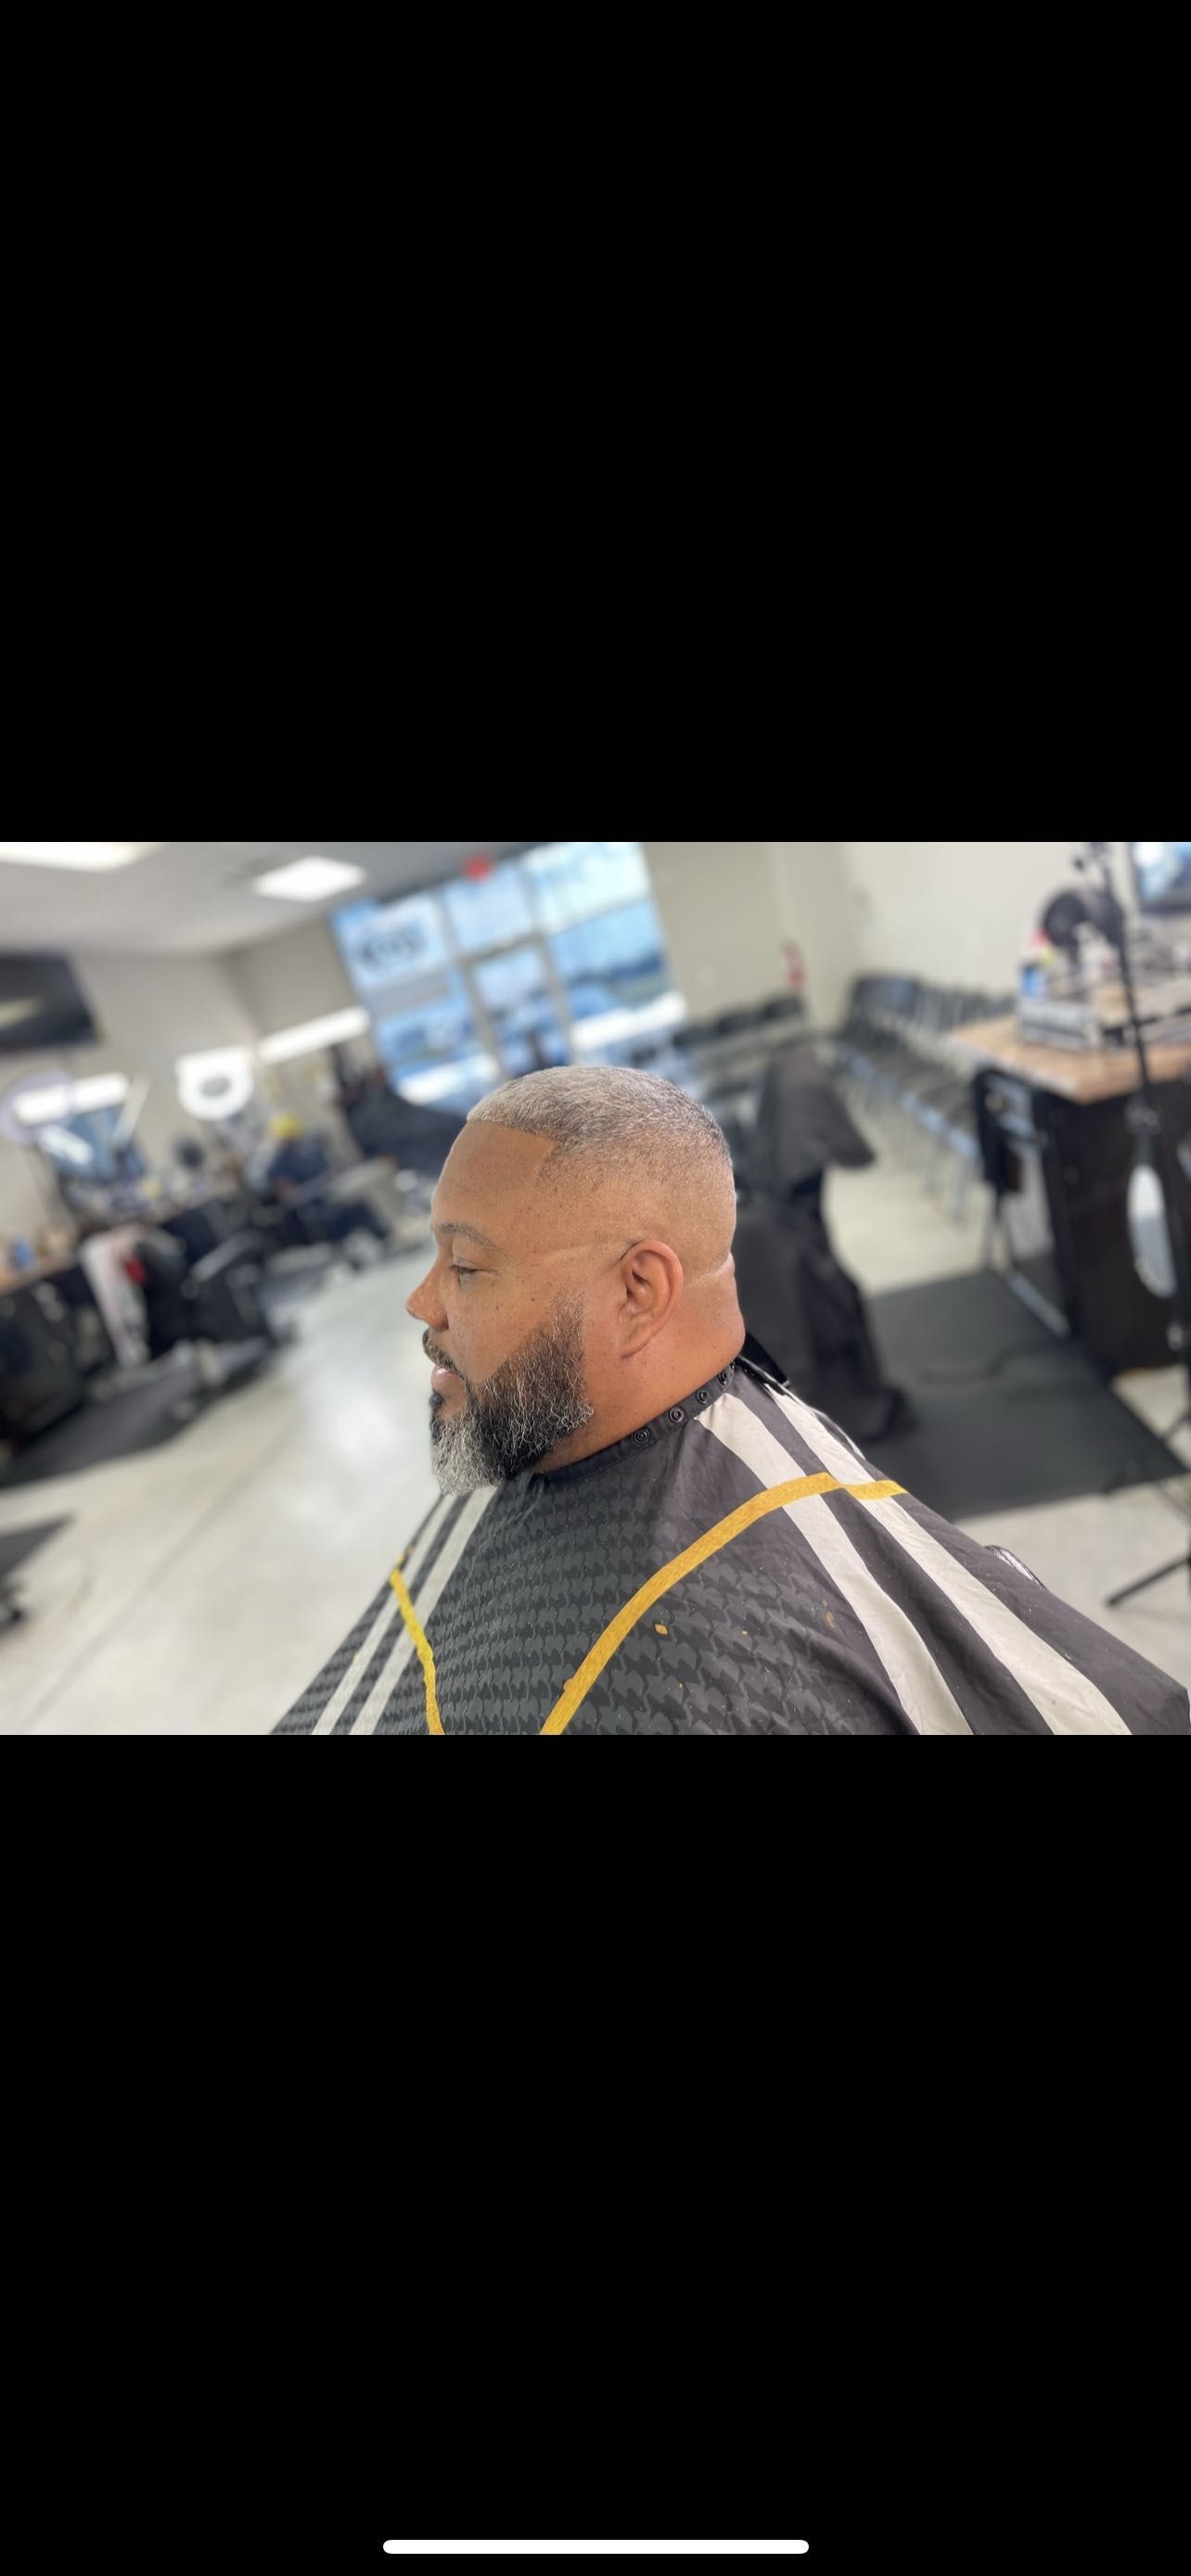 The Man’s Haircut portfolio